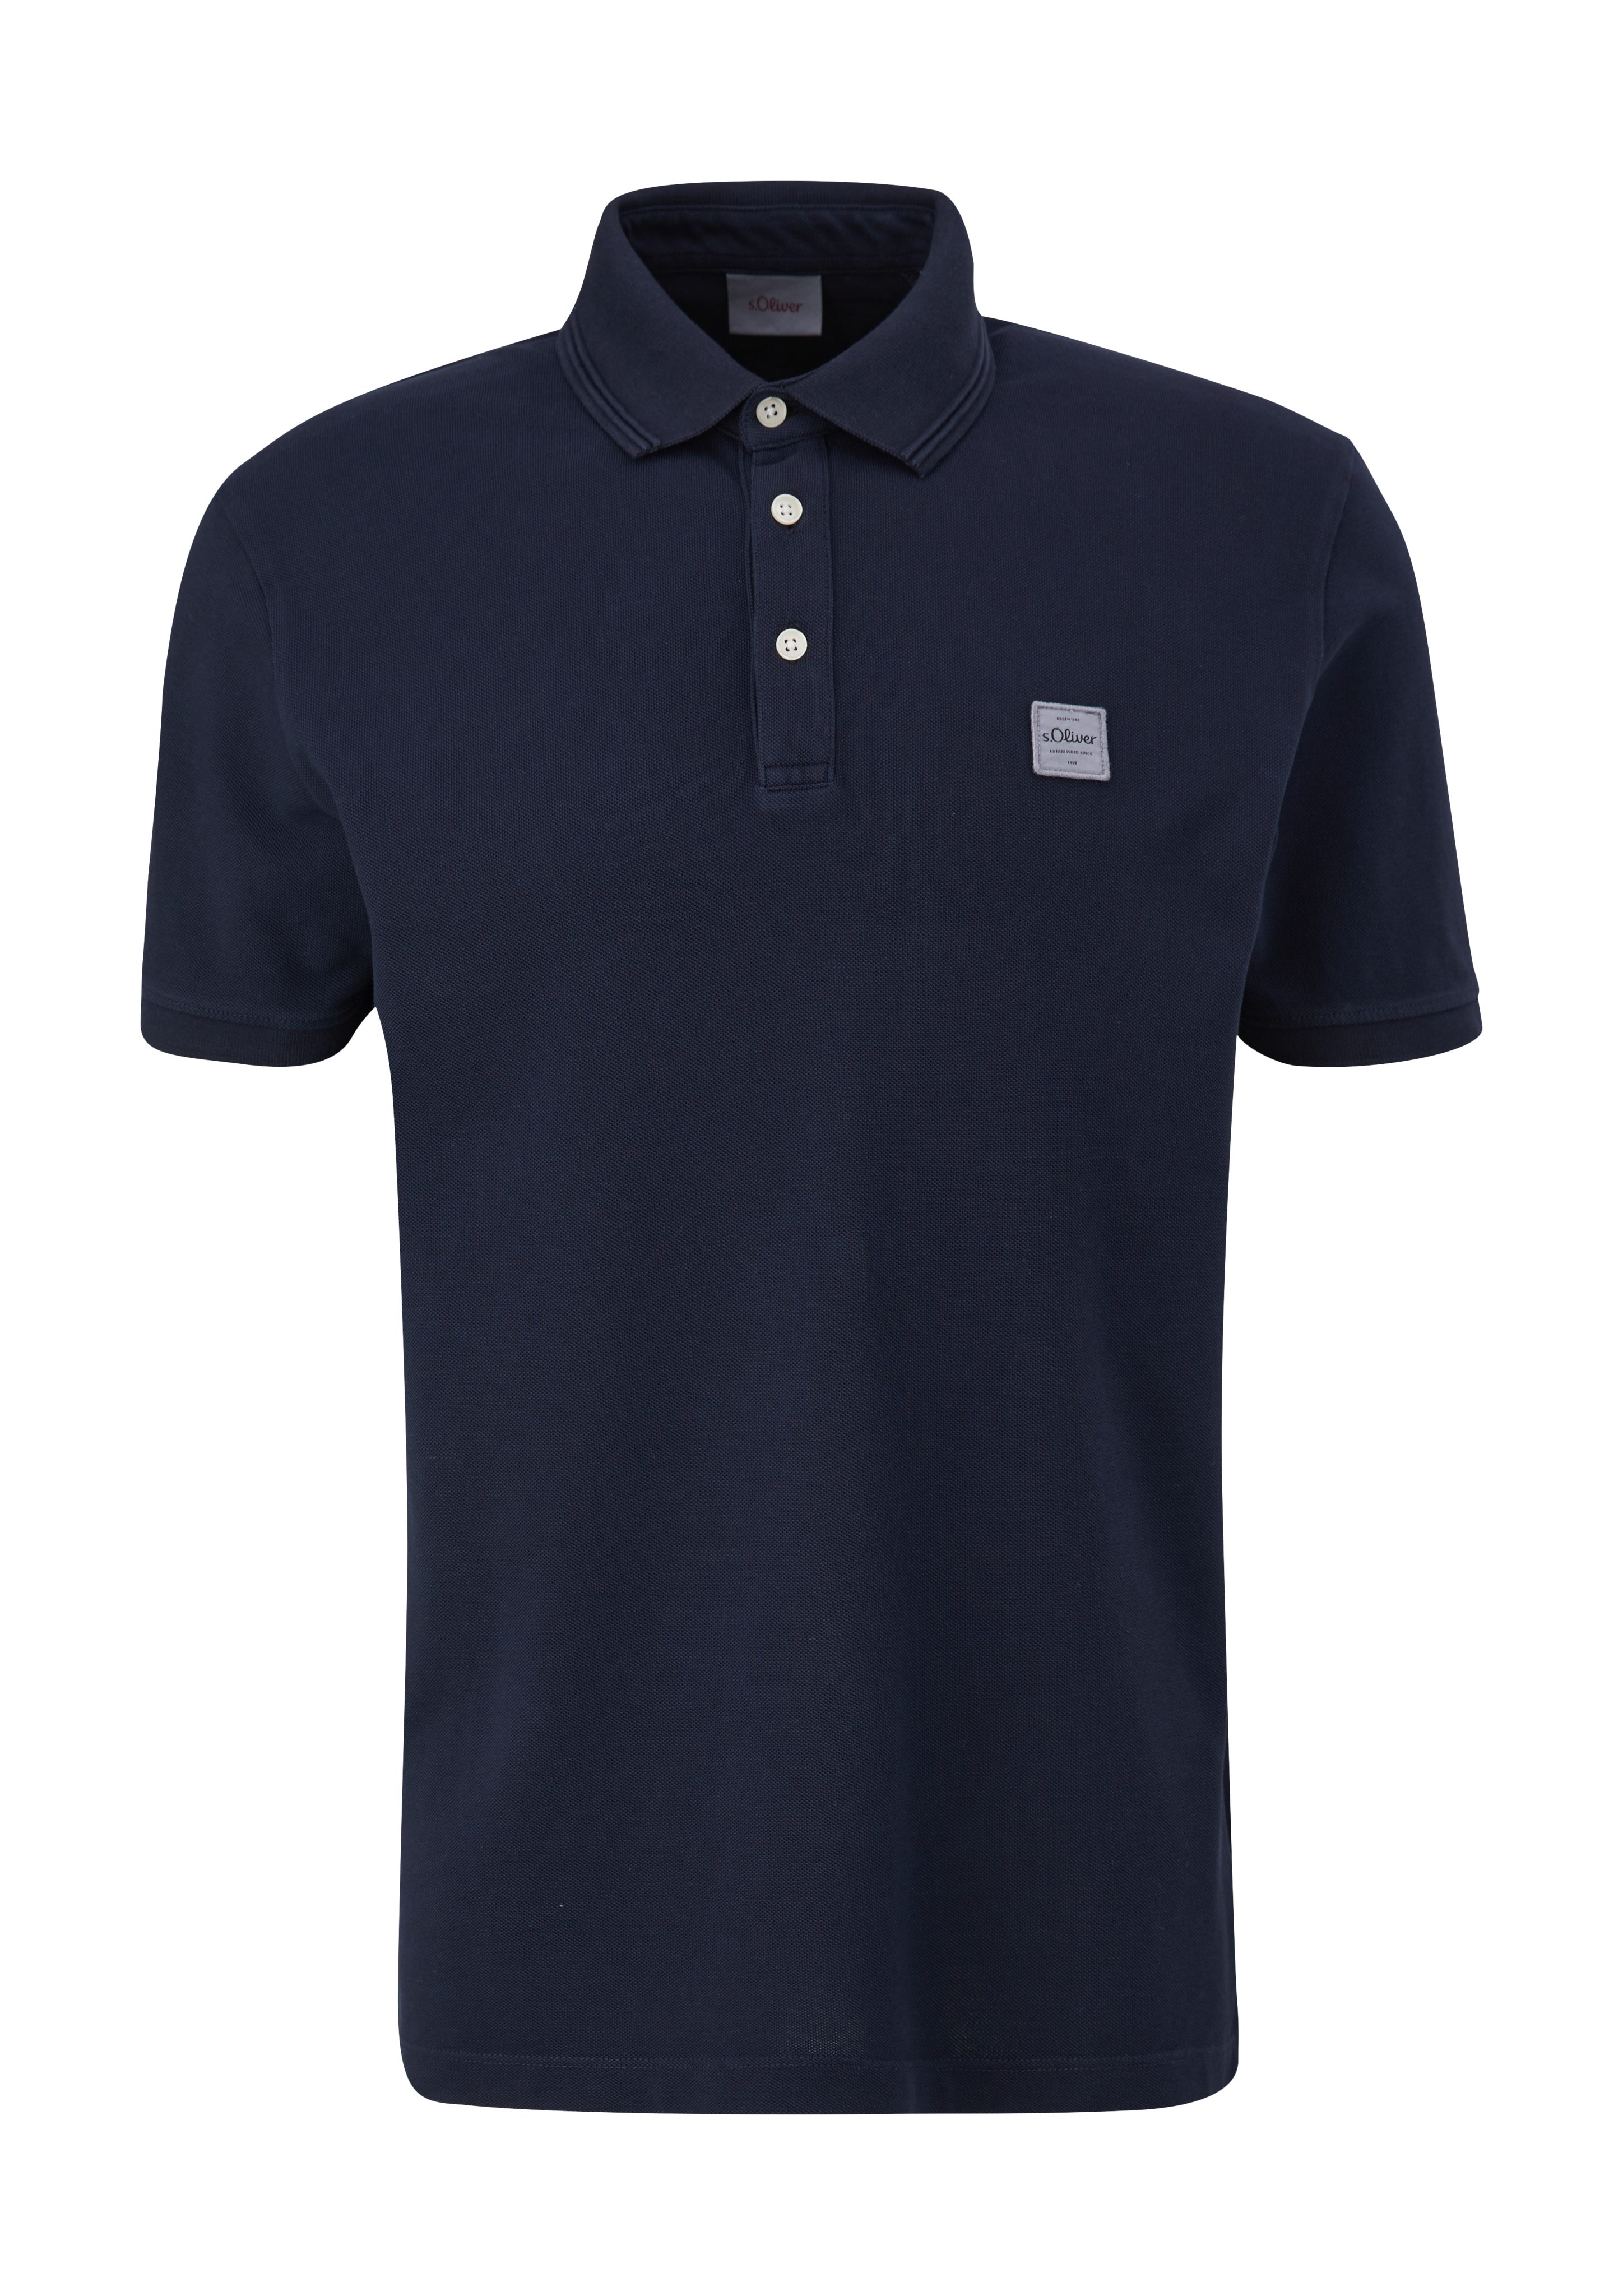 Garment Poloshirt mit navy Label-Patch Dye, s.Oliver Polo-Shirt Logo-Patch